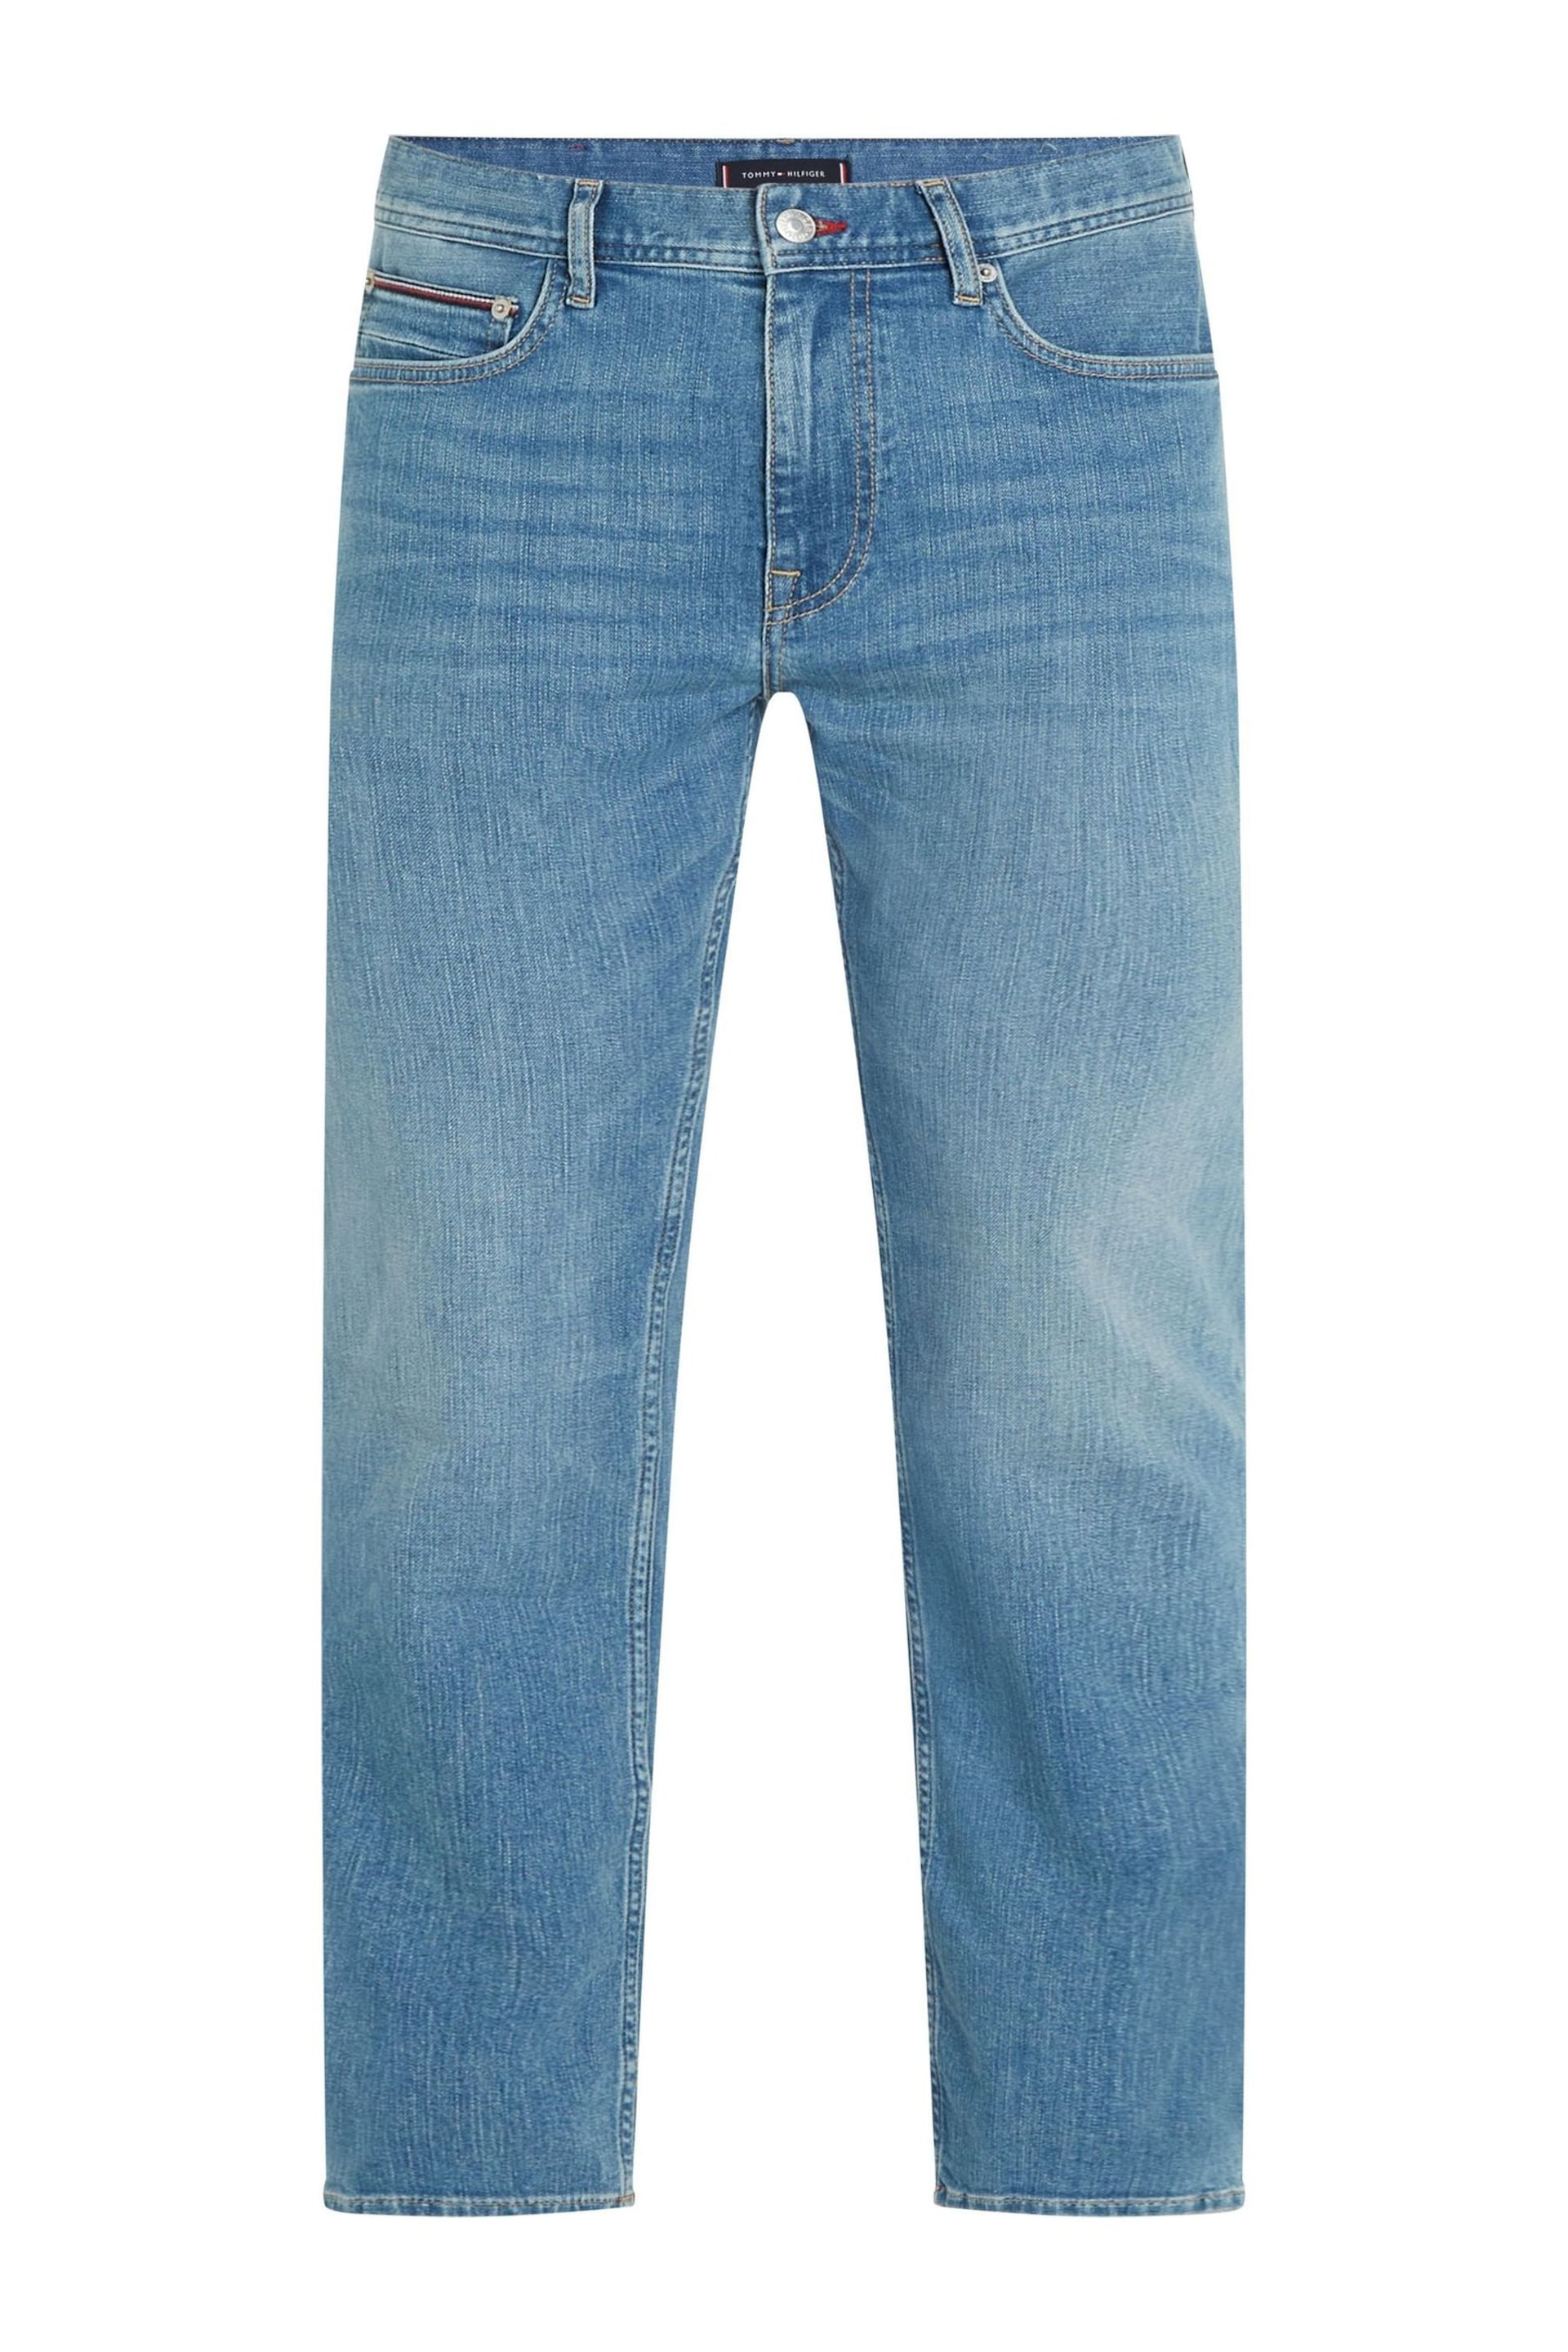 Tommy Hilfiger Blue Madison Jeans - Image 2 of 4